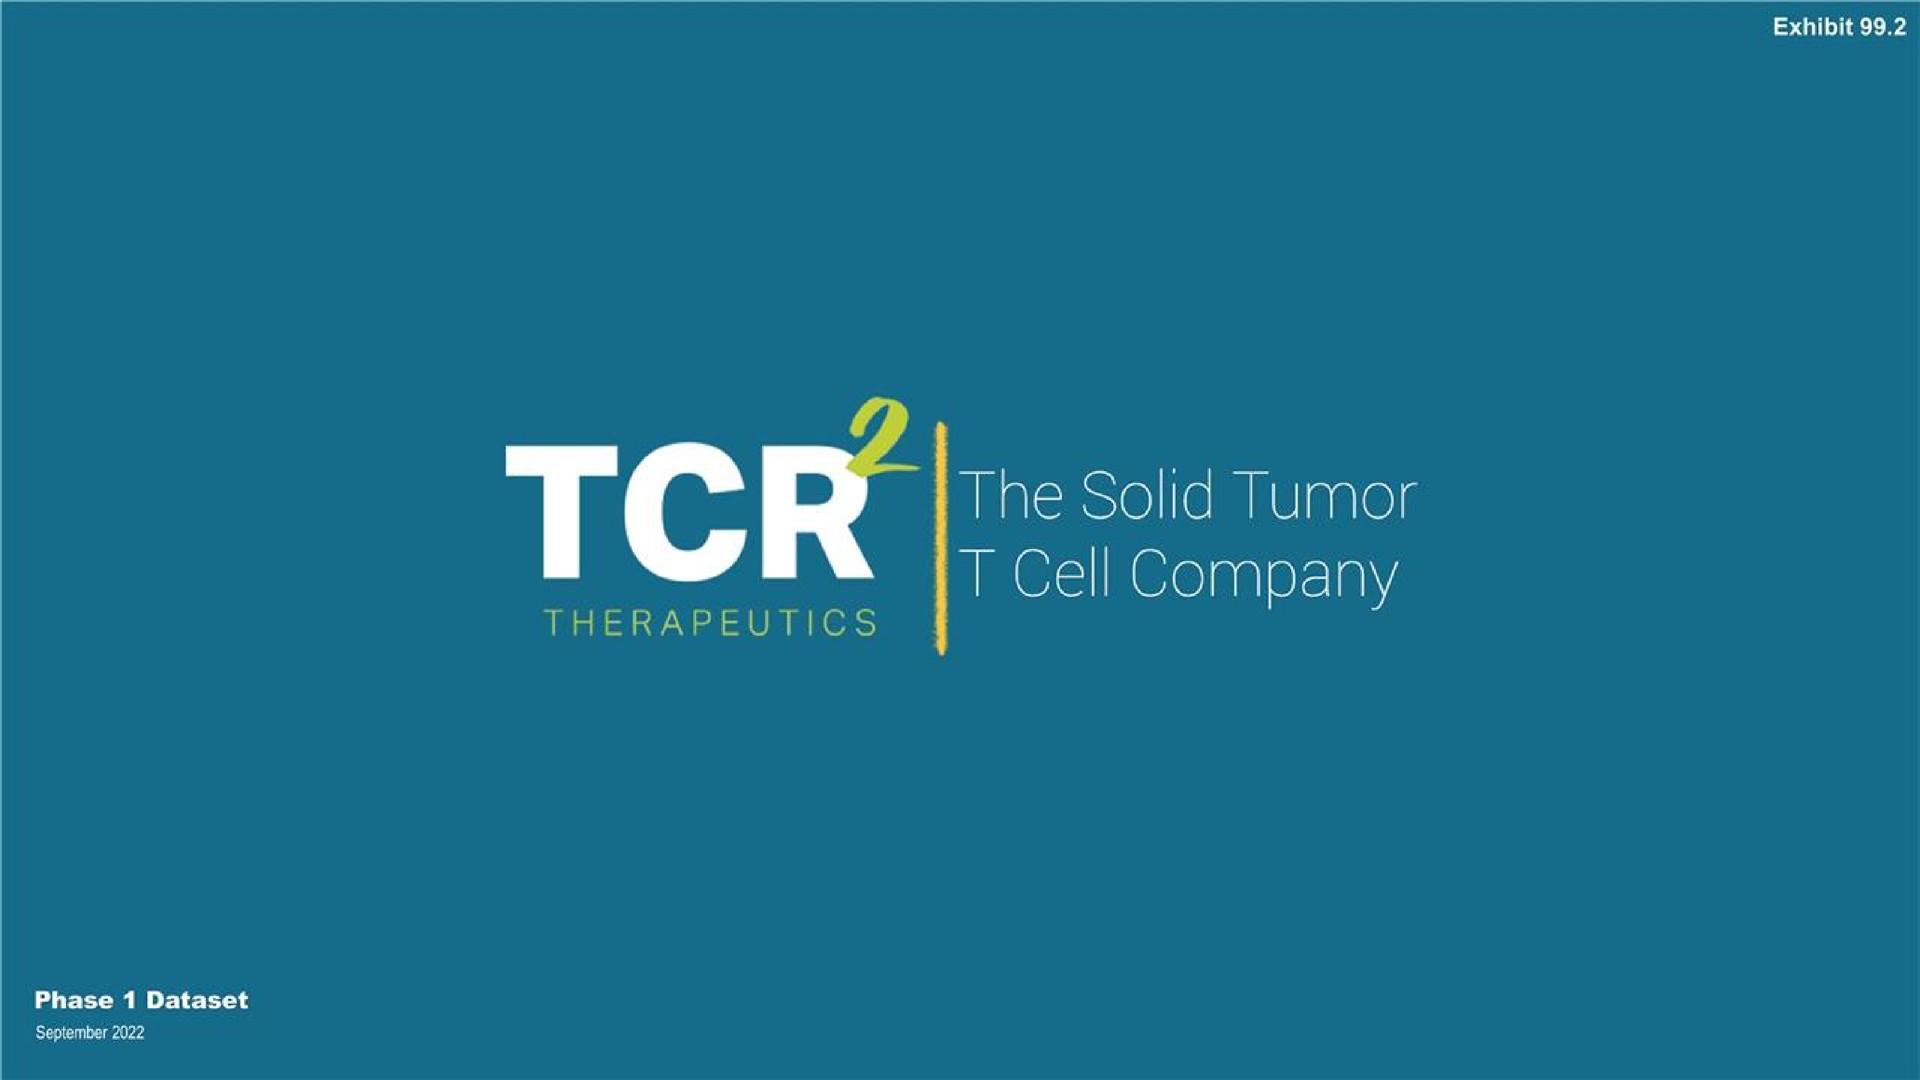 therapeutics he solid tumor cell company | TCR2 Therapeutics